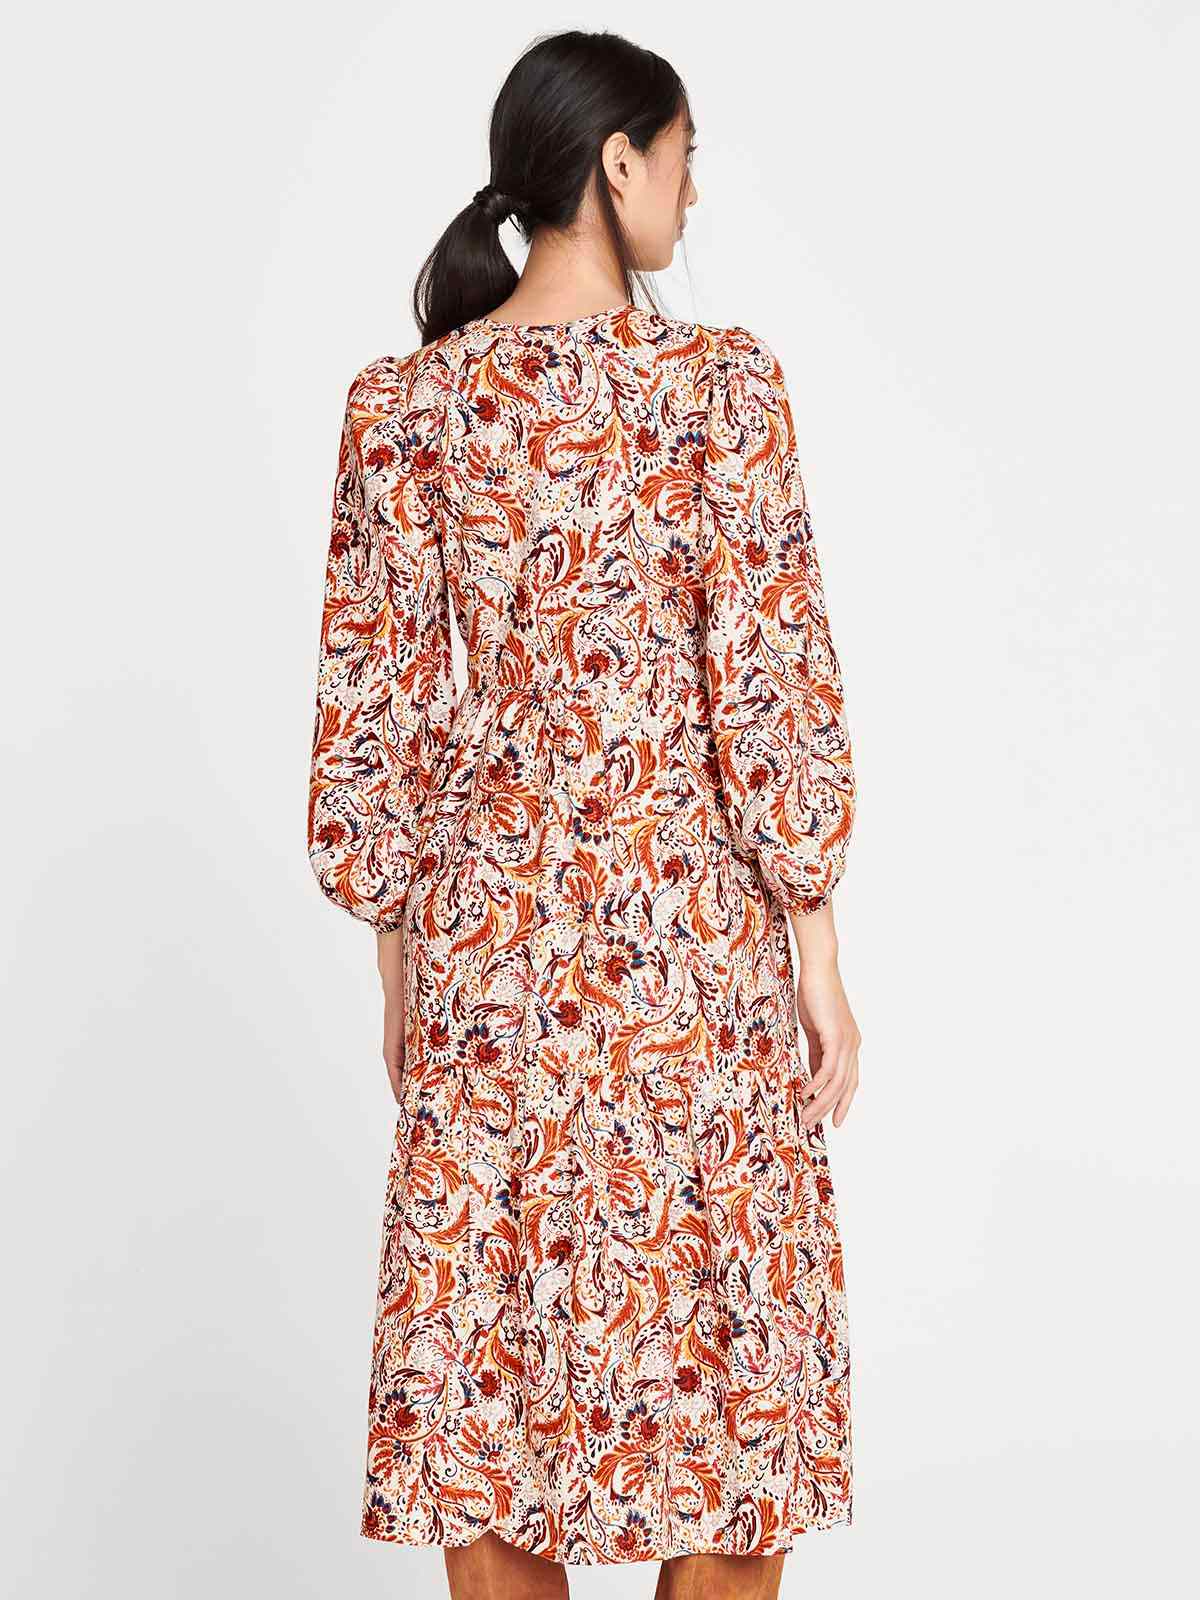 Hemp/Organic Cotton Dress